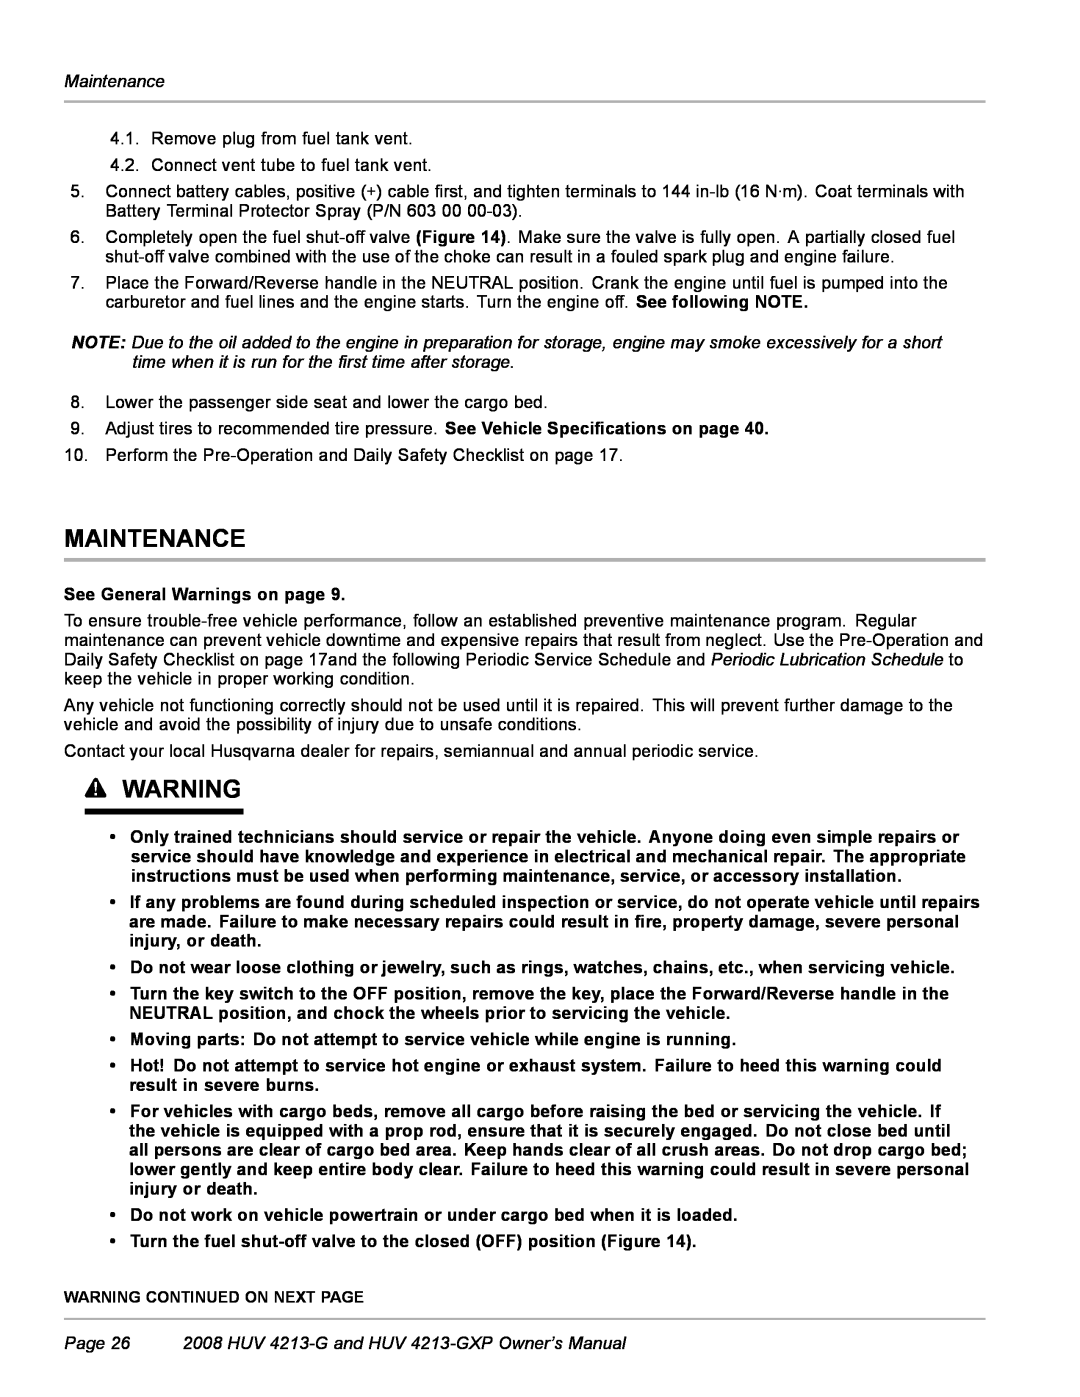 Husqvarna HUV 4213-GXP owner manual Maintenance 